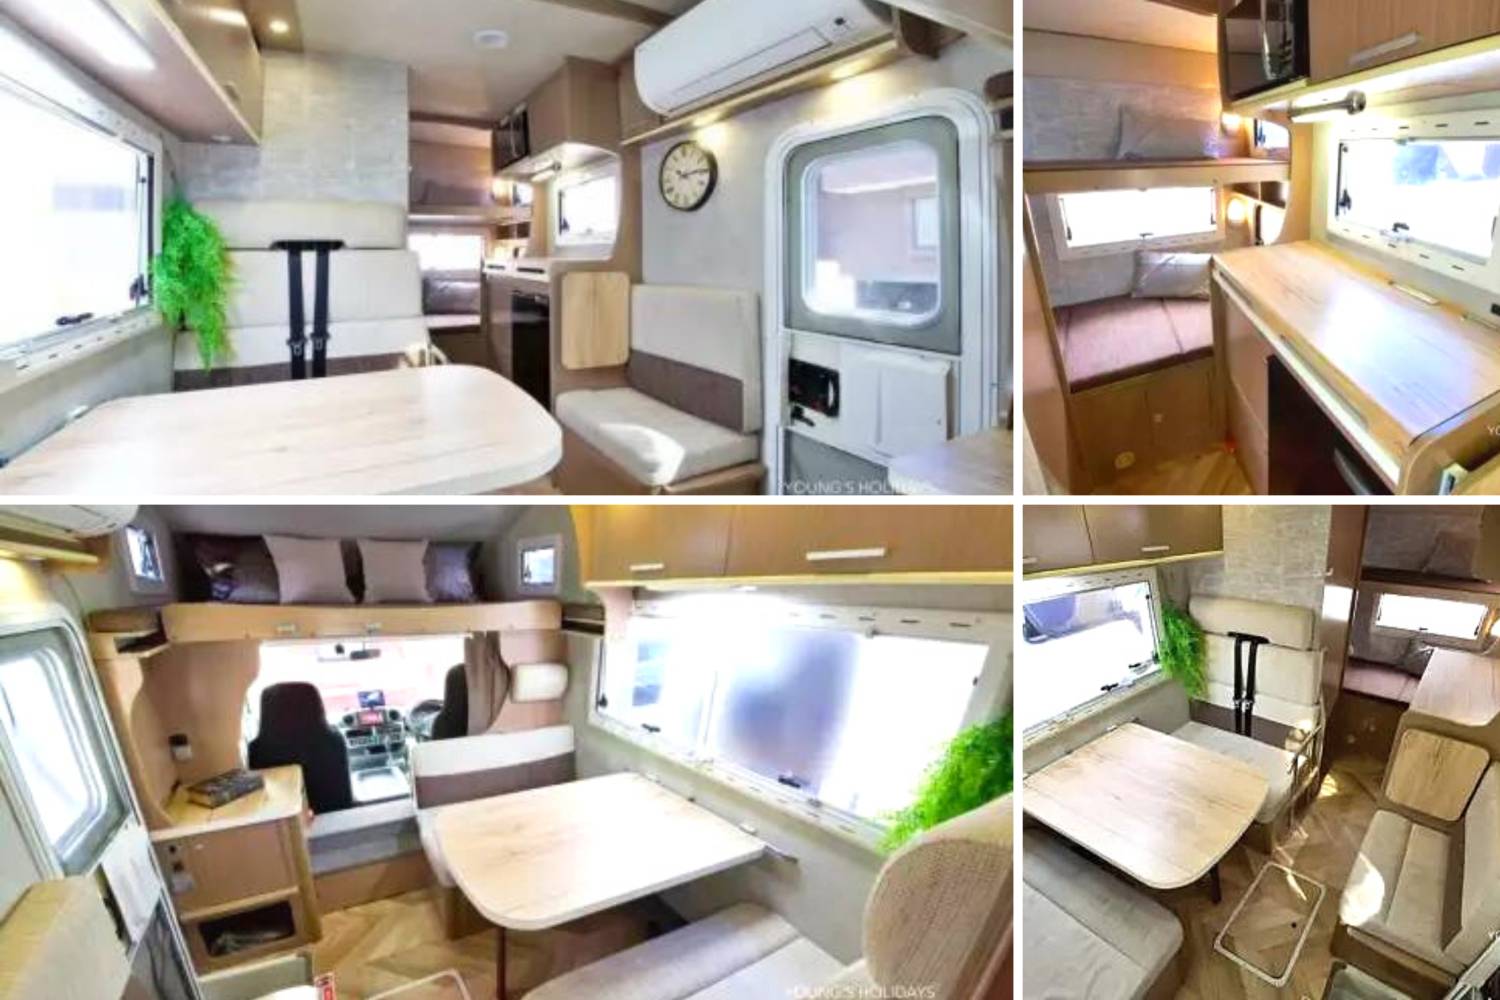 【Tokyo】Japan 6ppl RV Caravan 24 hours Rental Experience(JTMF)